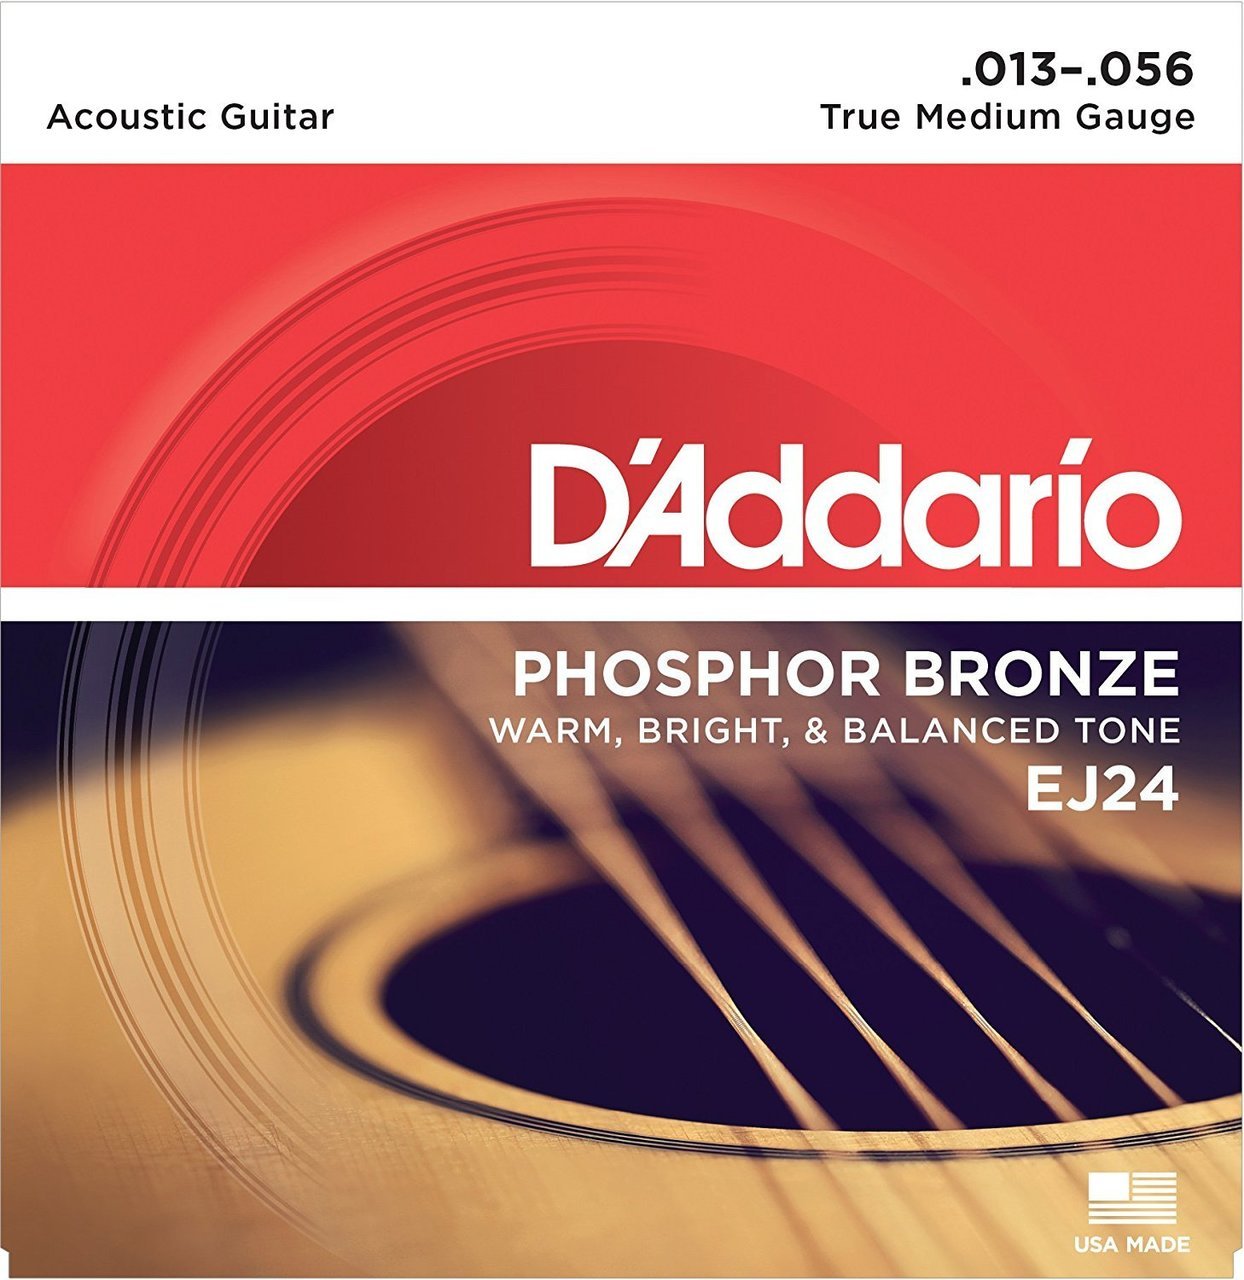 D'Addario Phosphor Bronze True Medium 13-56 Acoustic Guitar String Sets